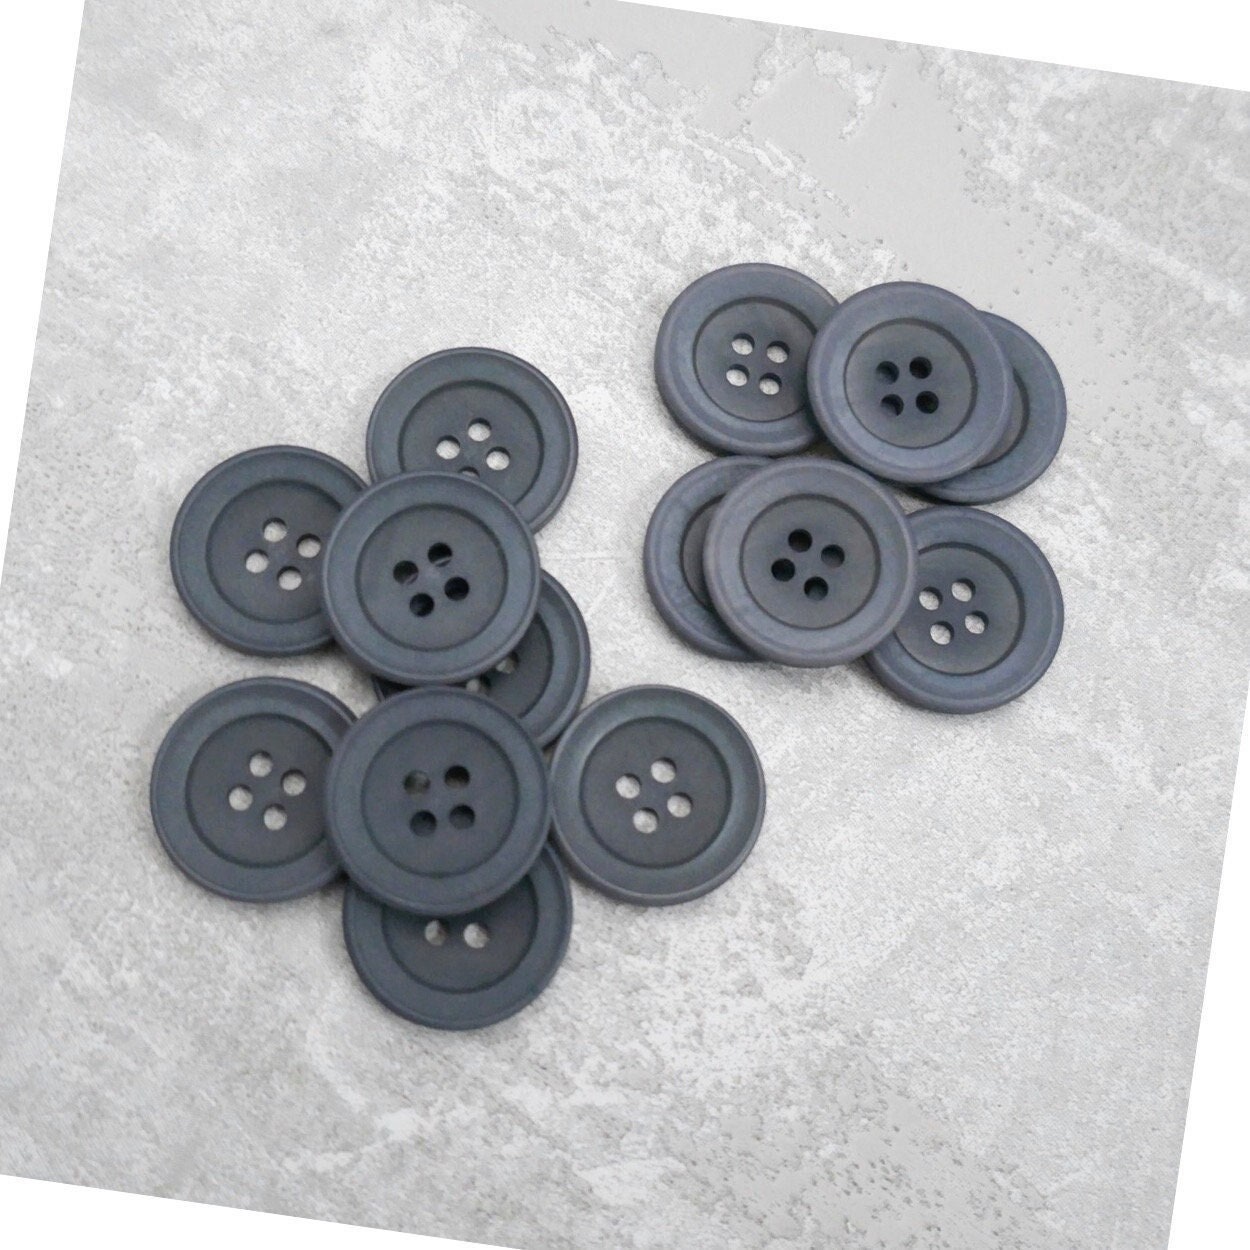 Metal Pewter Norwegian Snowflake Round Shank Button (BX2161)20mm